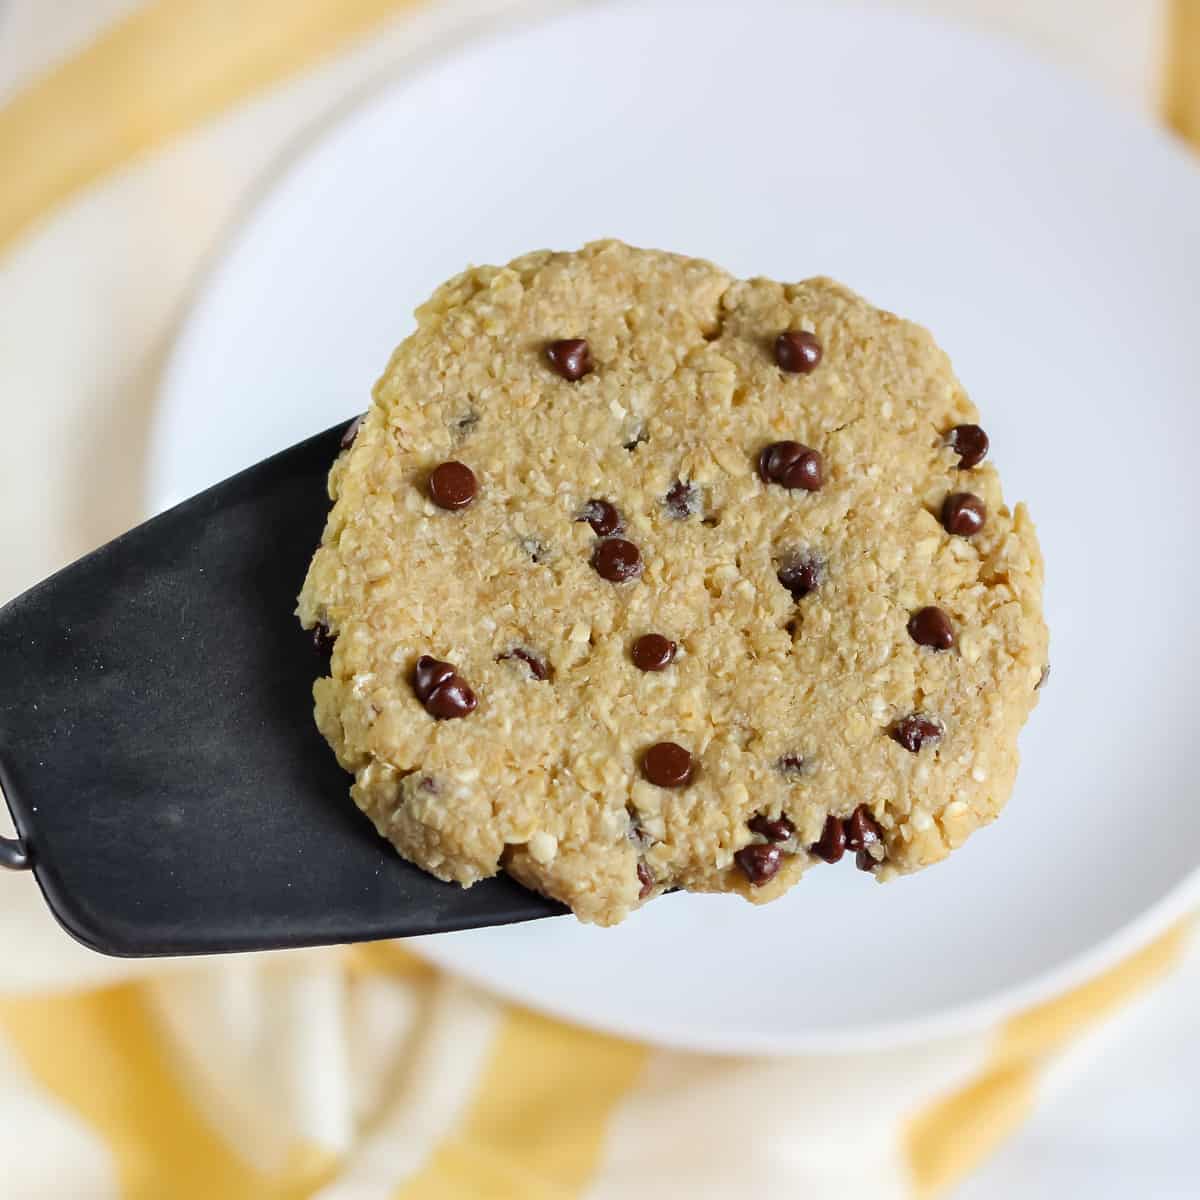 Microwave Oatmeal Cookie